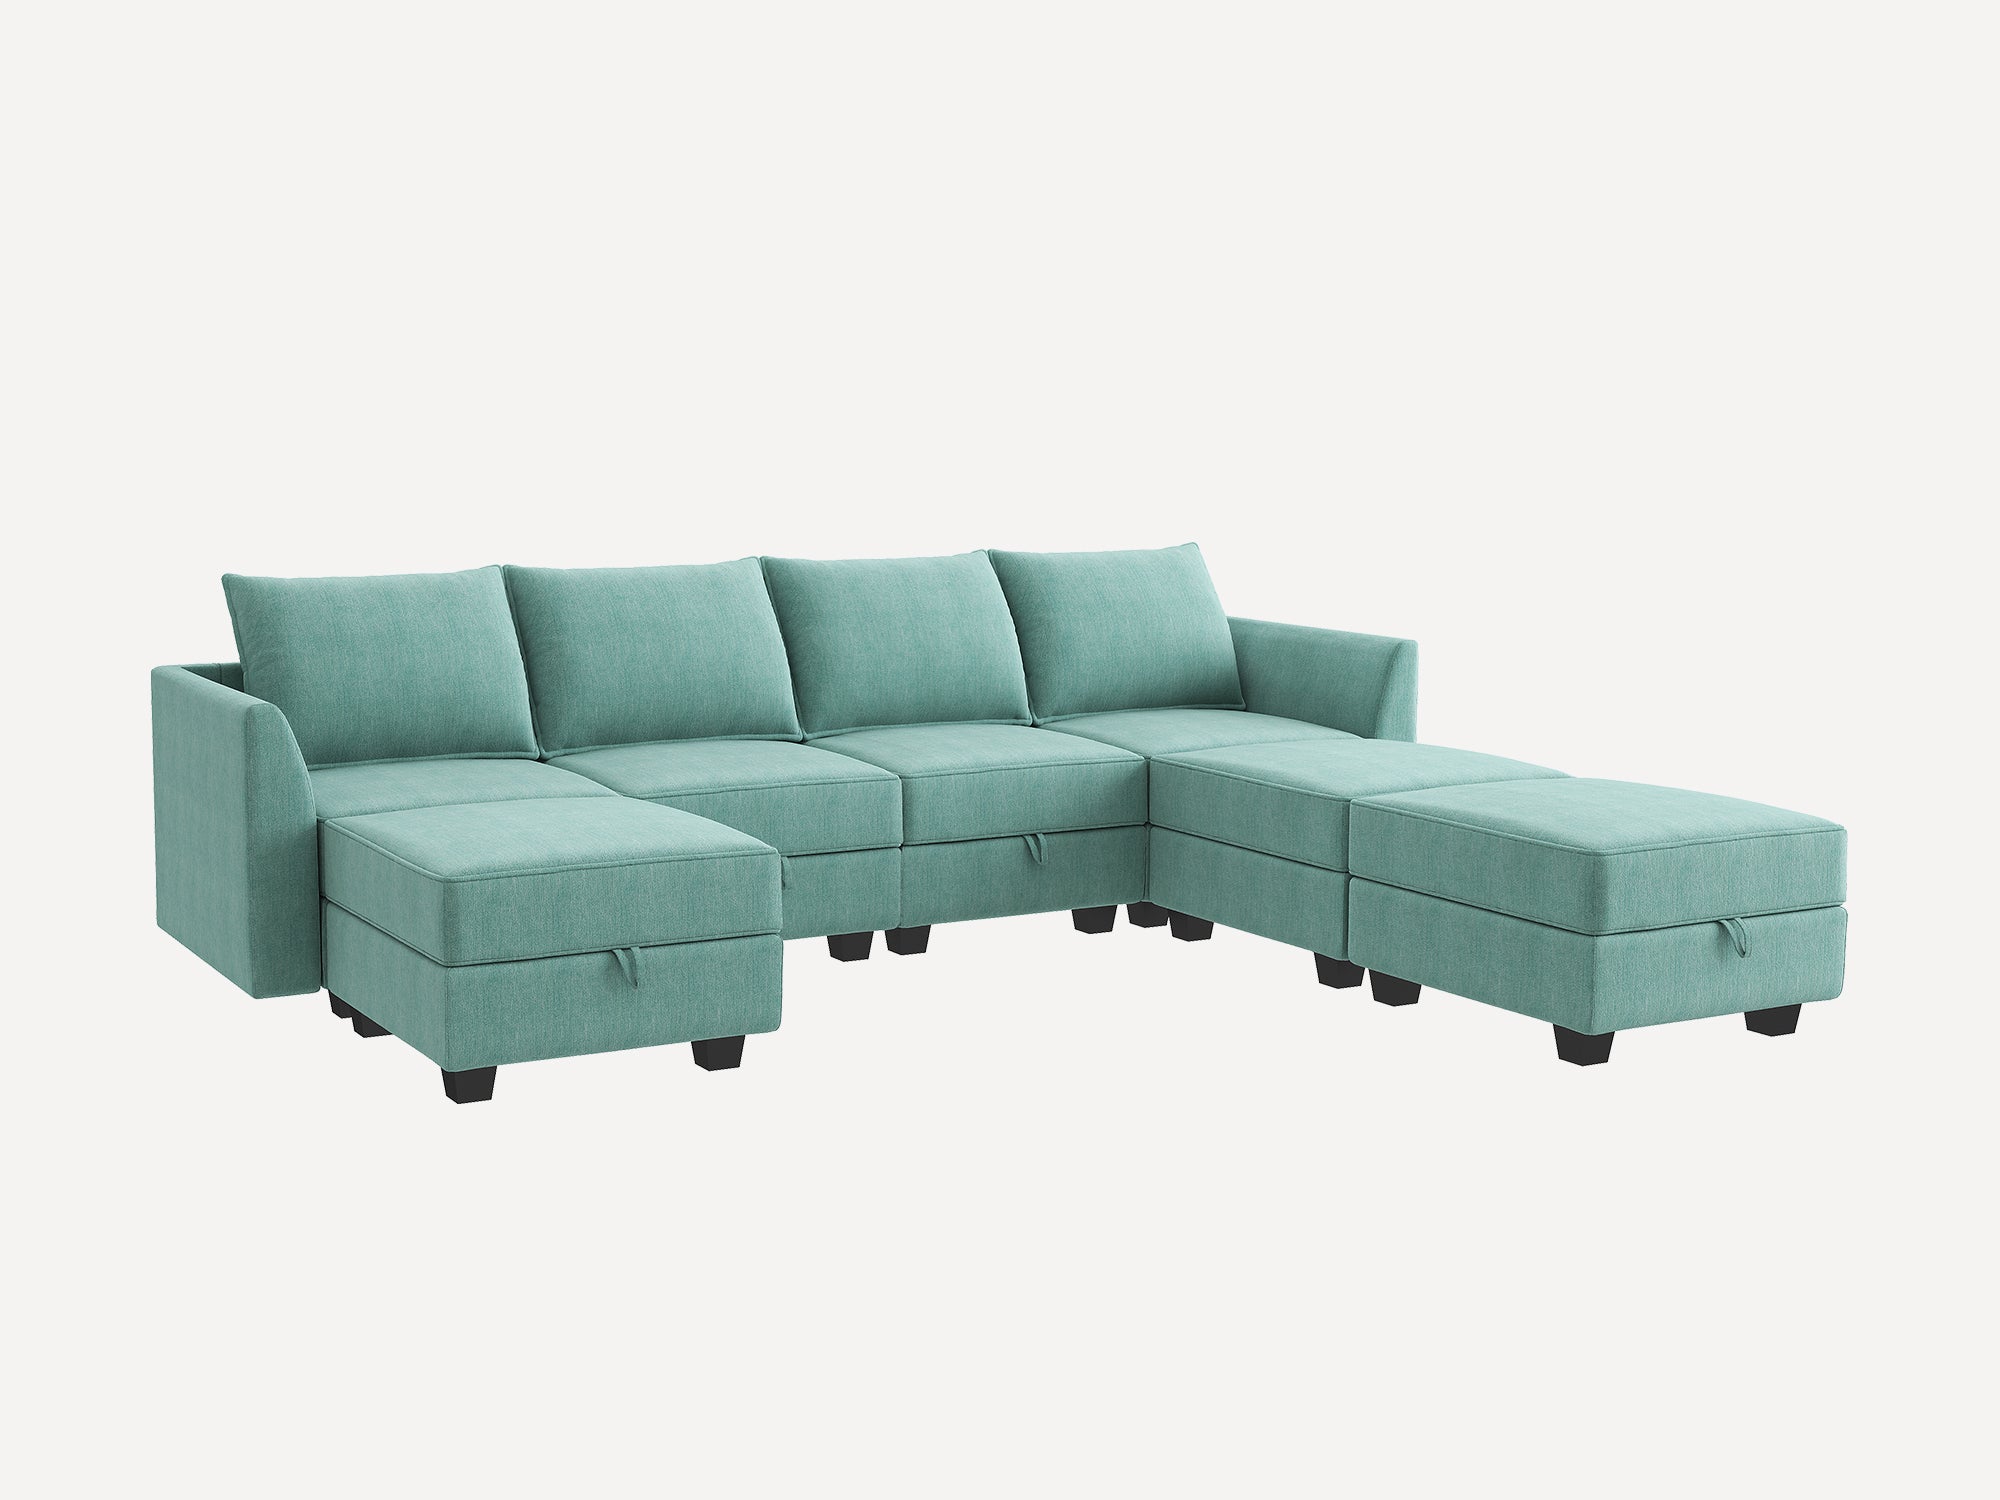 HONBAY U-Shaped Classic Modular Sofa with Storage Seater